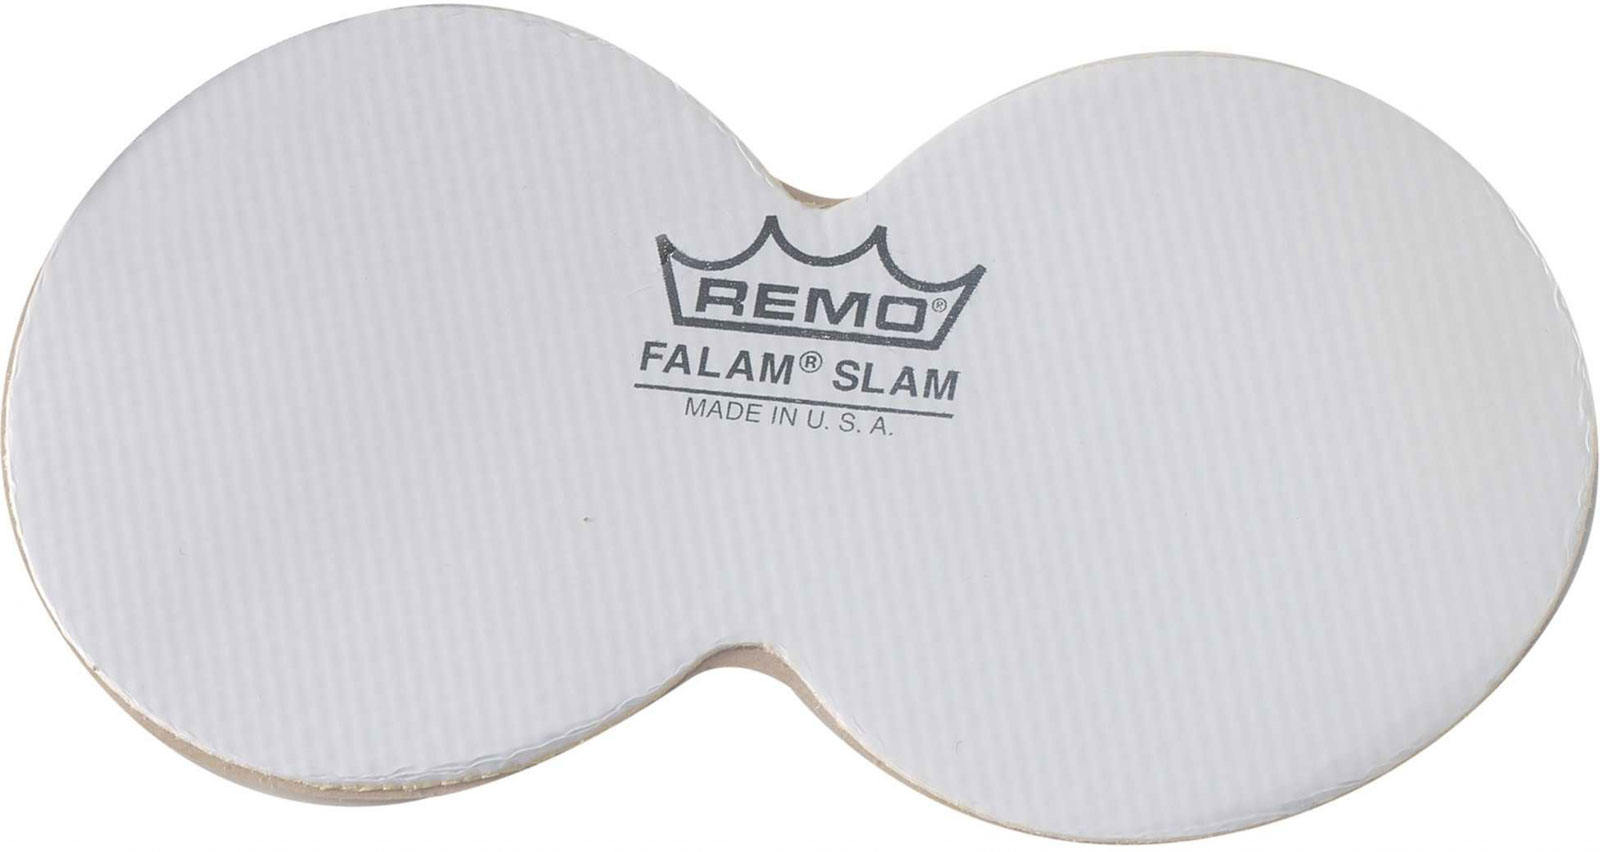 REMO DOBLE FALAM SLAM - 2.5